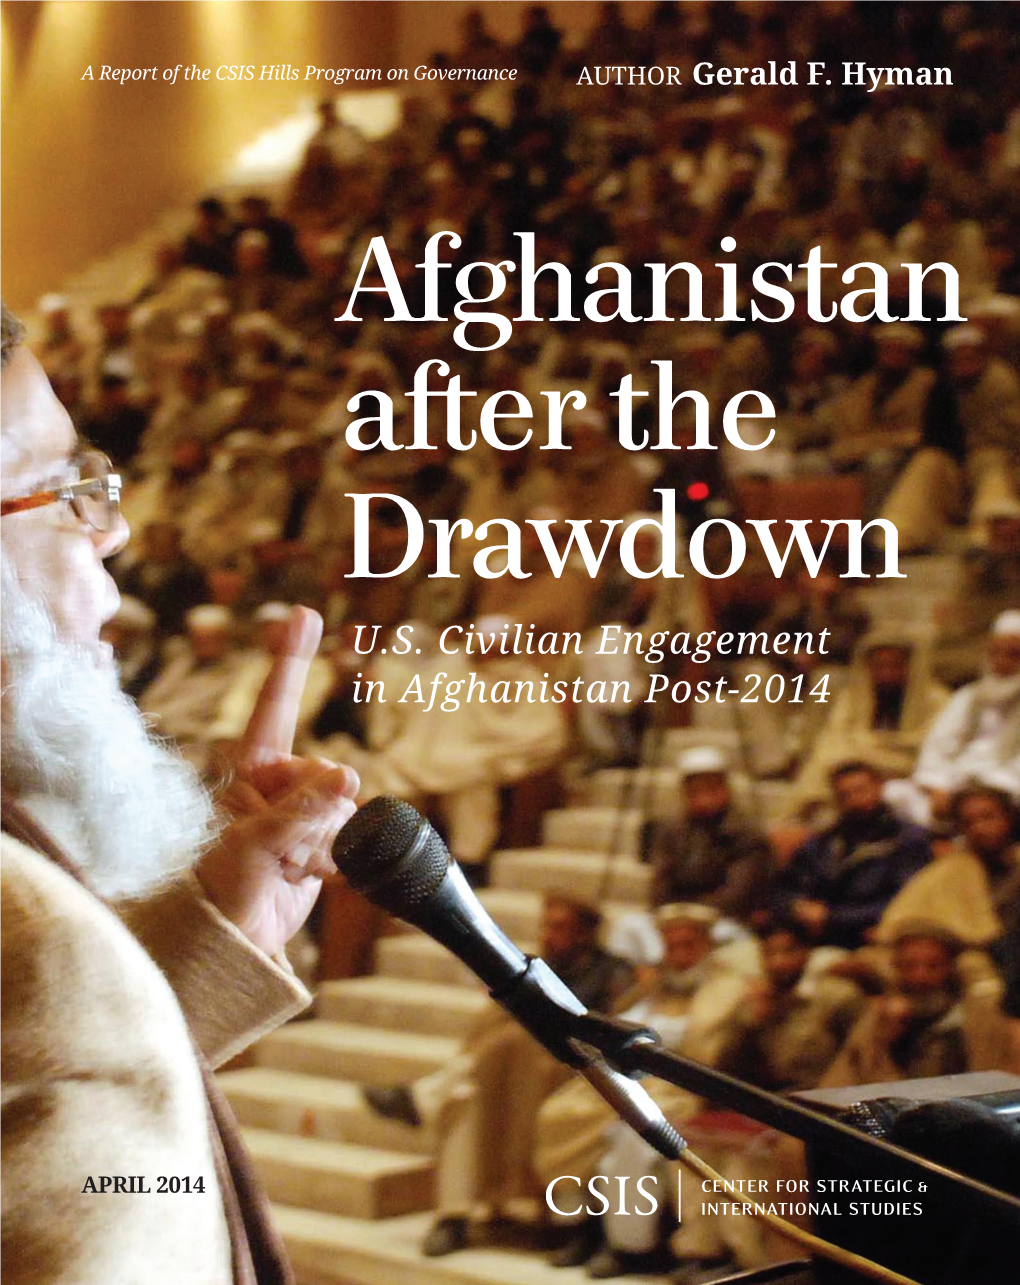 Afghanistan After the Drawdown 1616 Rhode Island Avenue NW | Washington DC 20036 U.S